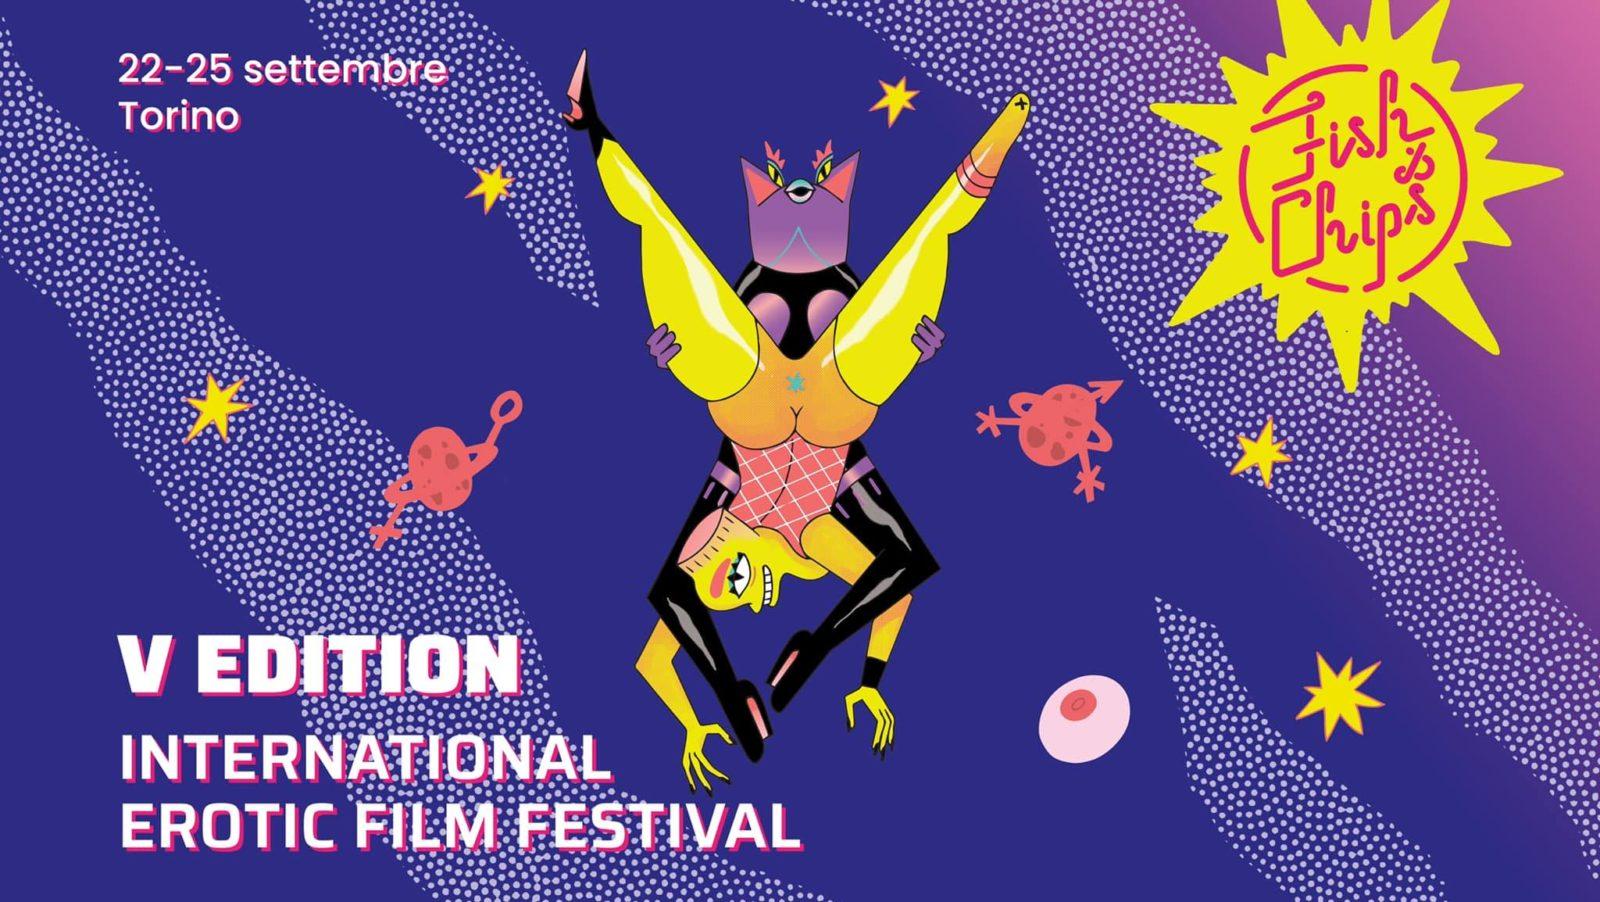 Fish & Chips International Erotic Film Festival